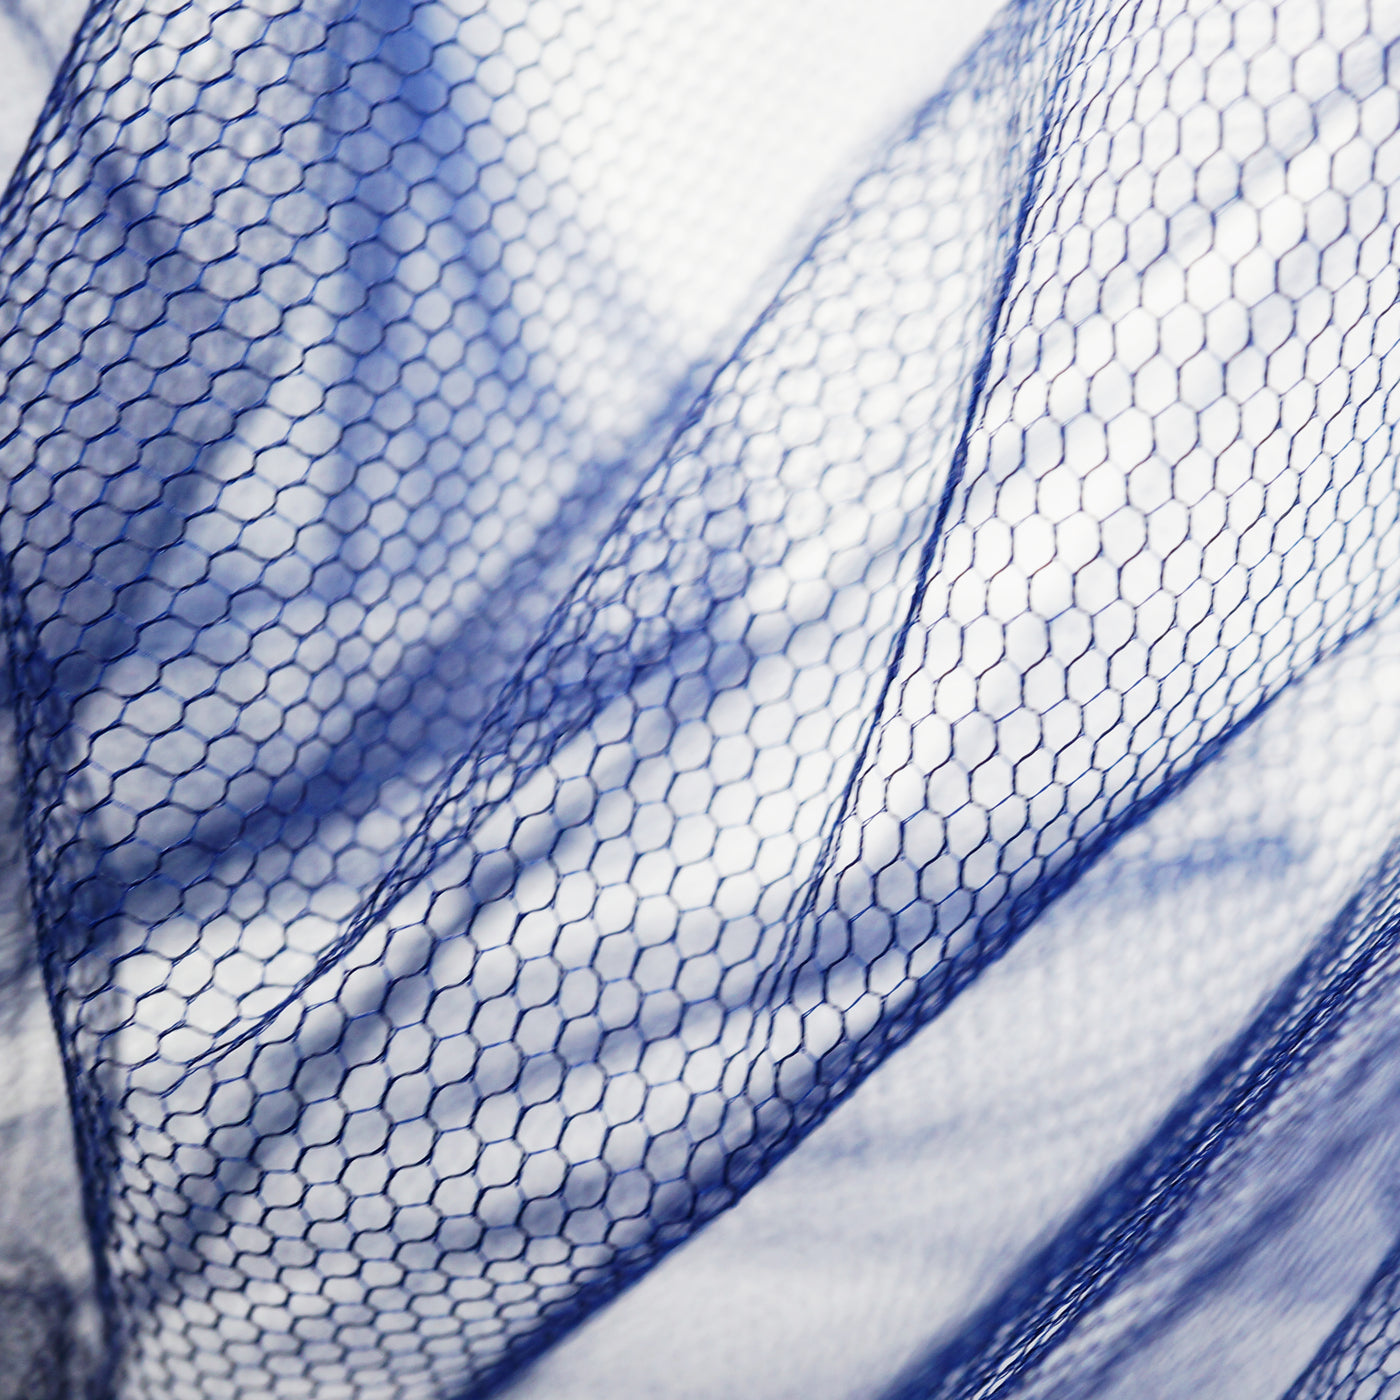 Nail art netting - MIDNIGHT BLUE